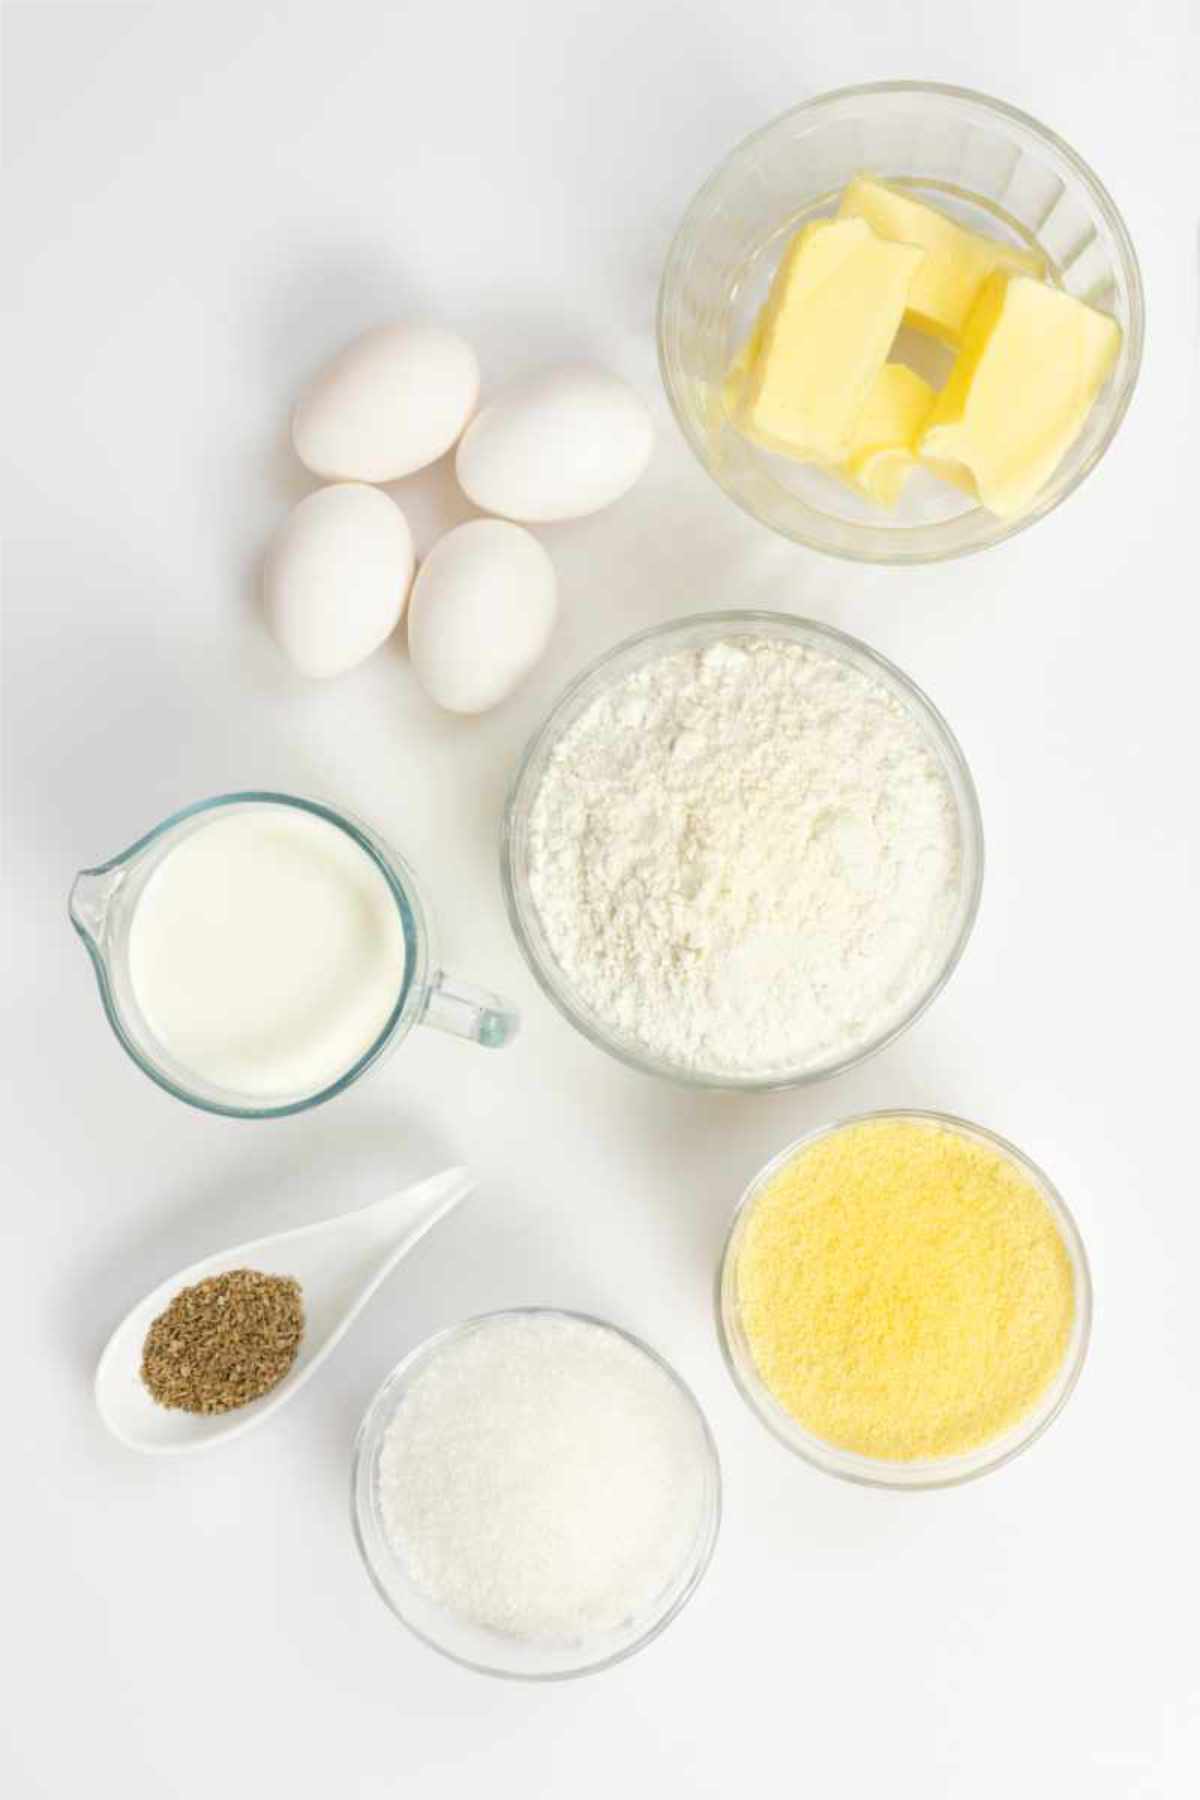 ingredients for making Cracker Barrel cornbread muffins.